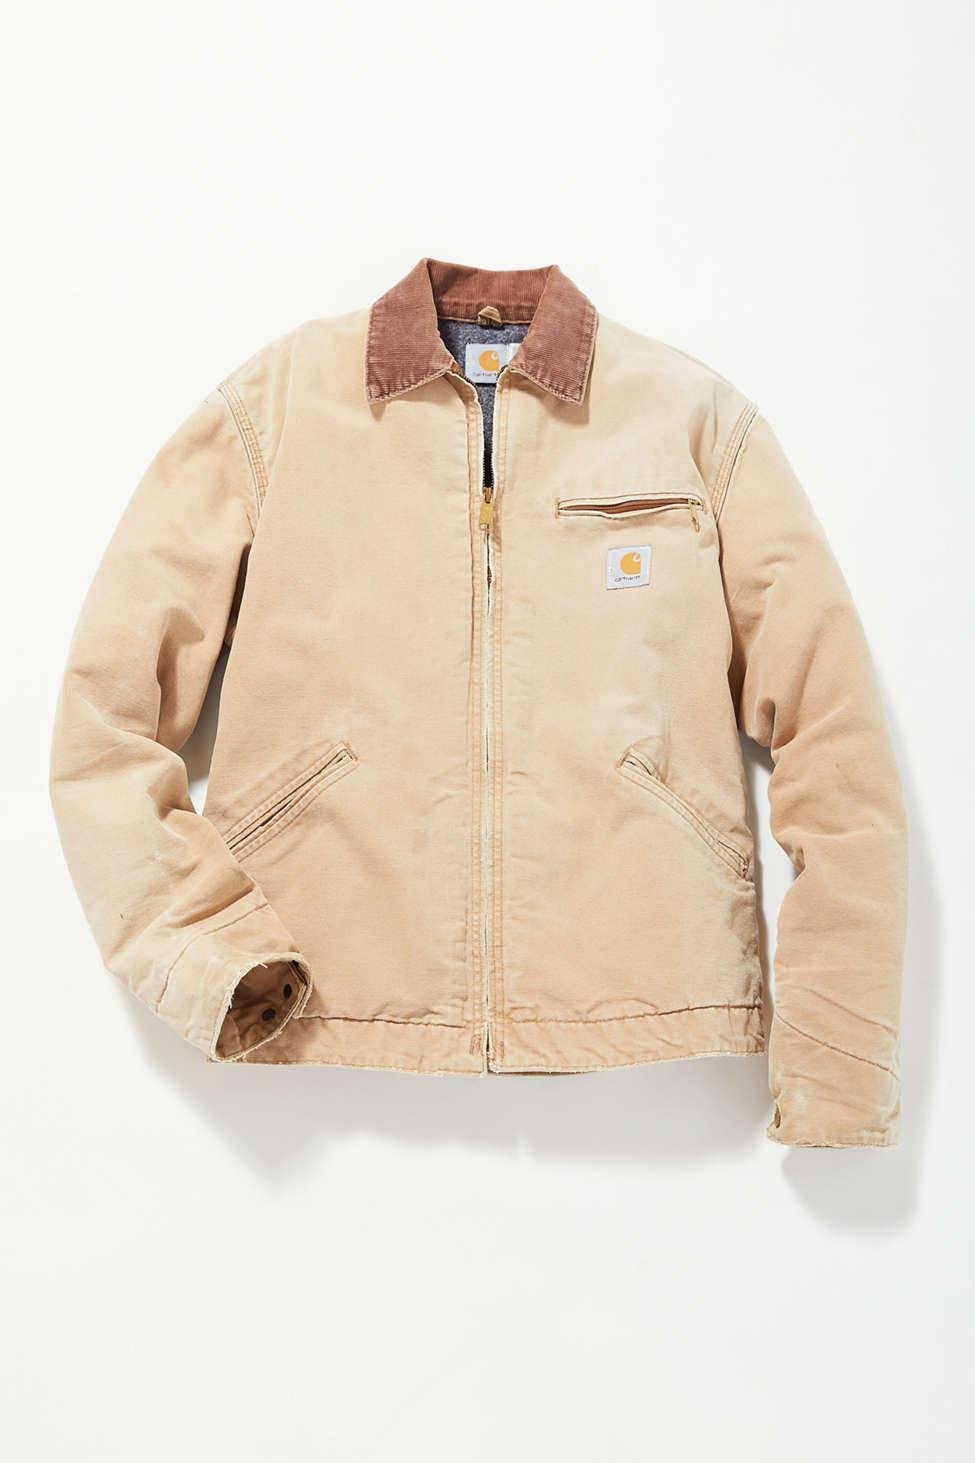 Urban Renewal Vintage Carhartt Jacket